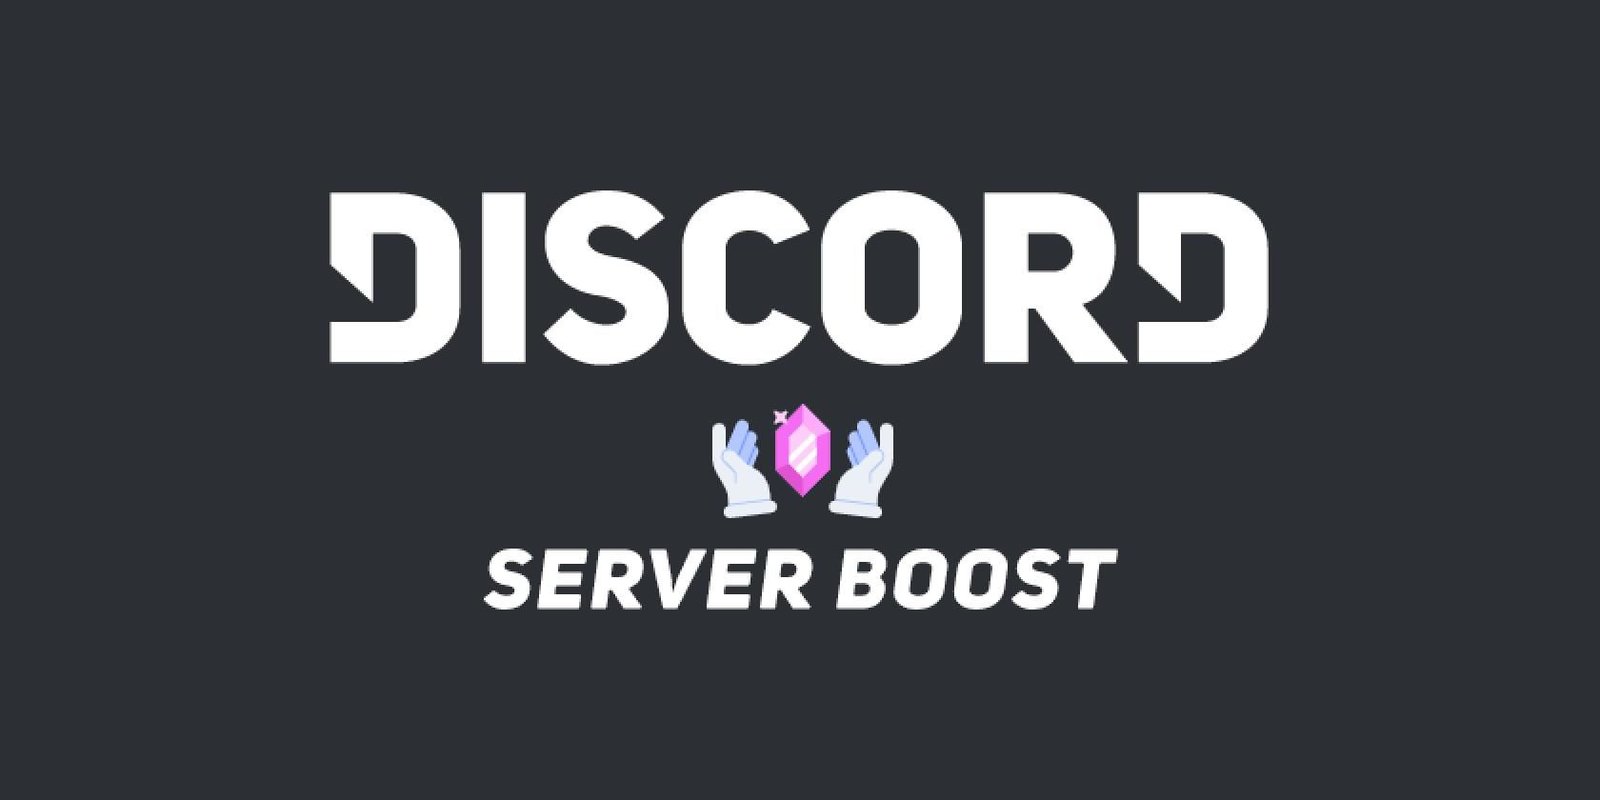 ✦Discord 14x server boost - 1 months ✦